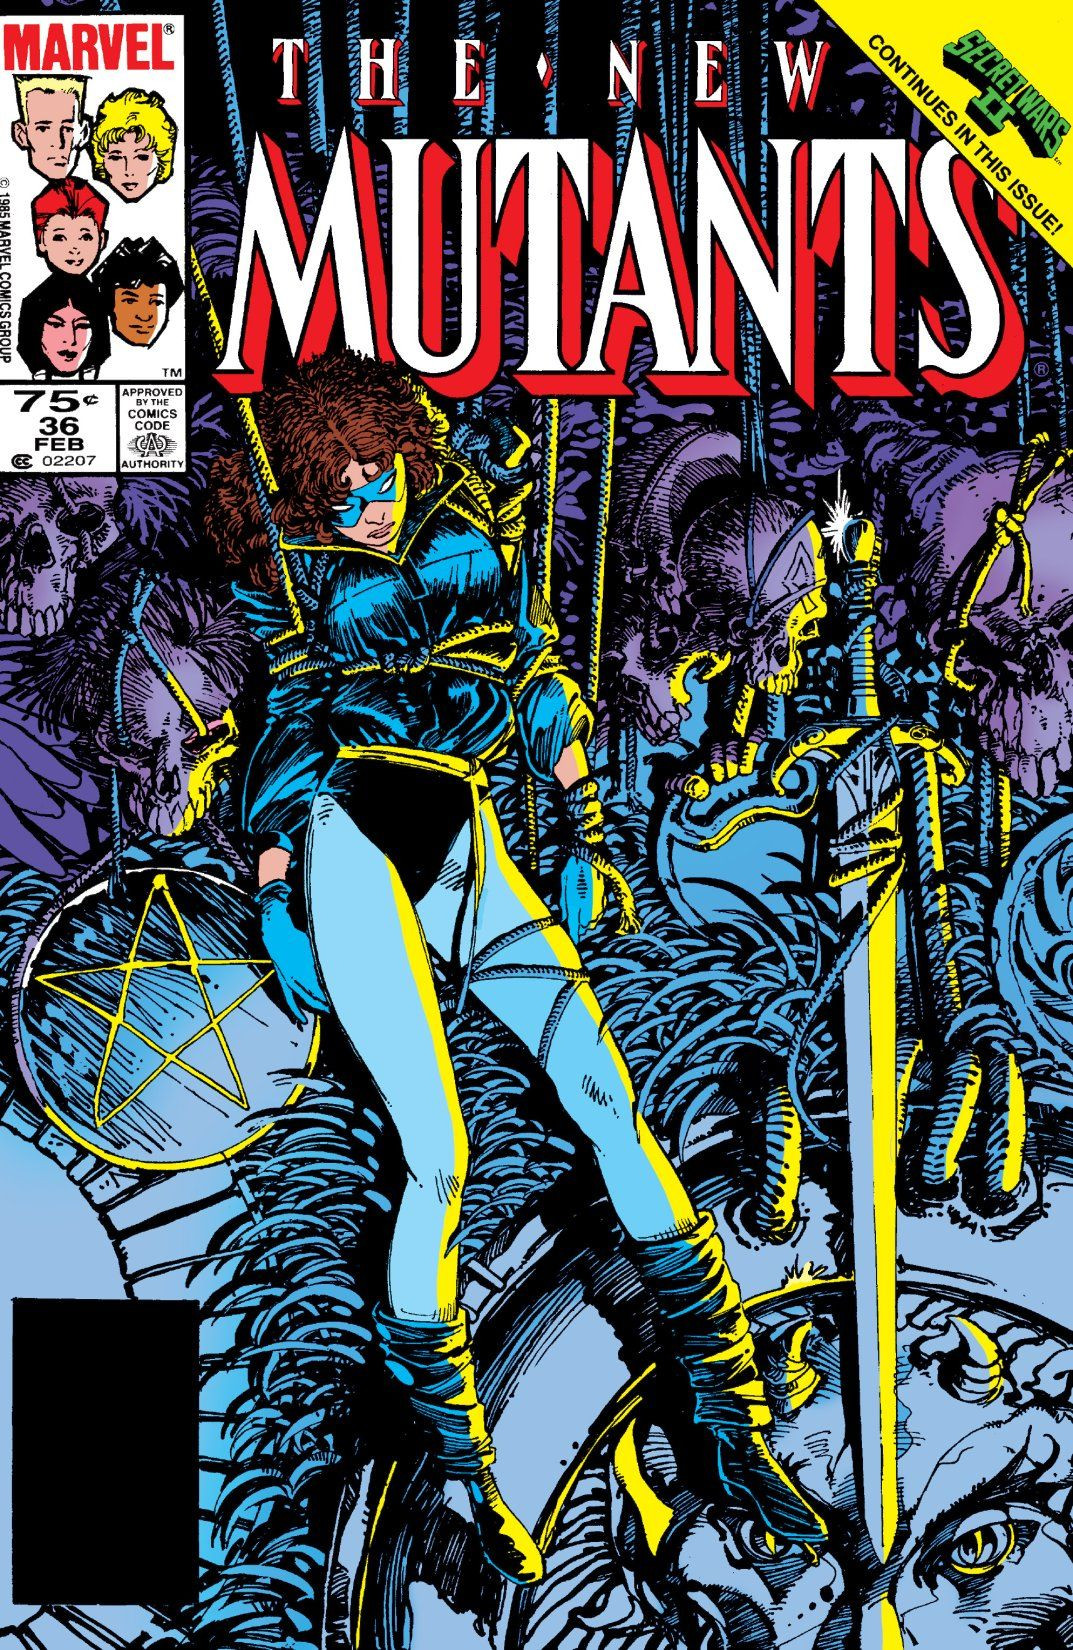 Mutants marvel